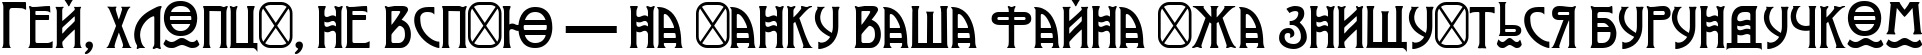 Пример написания шрифтом Modernist Three текста на украинском